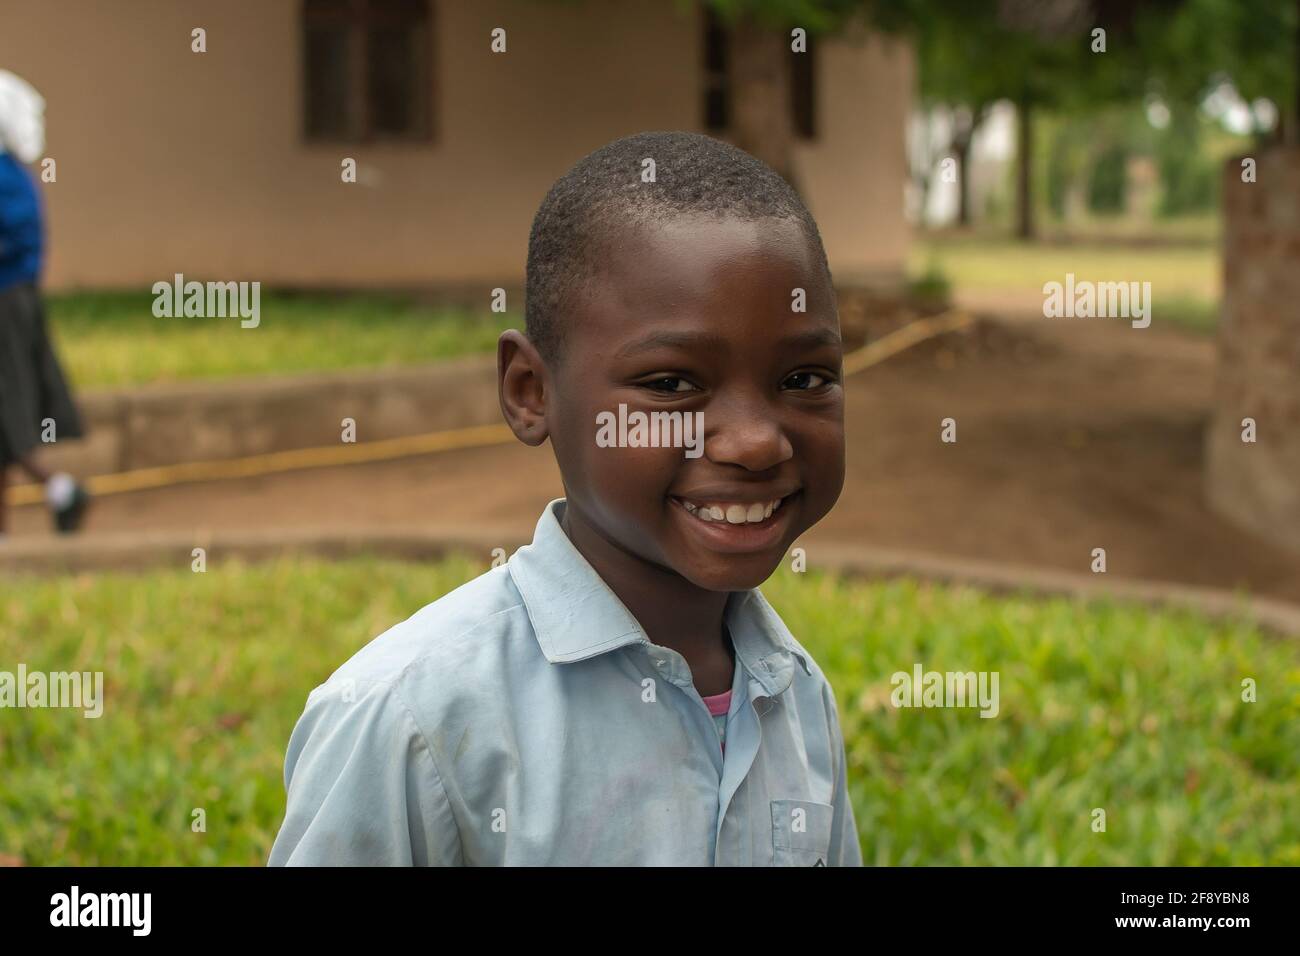 Dodoma, Tanzania. 08-18-2019. Portrait of a muslim smiling black boy on a class break during school hours in a remote village in Tanzania. Stock Photo